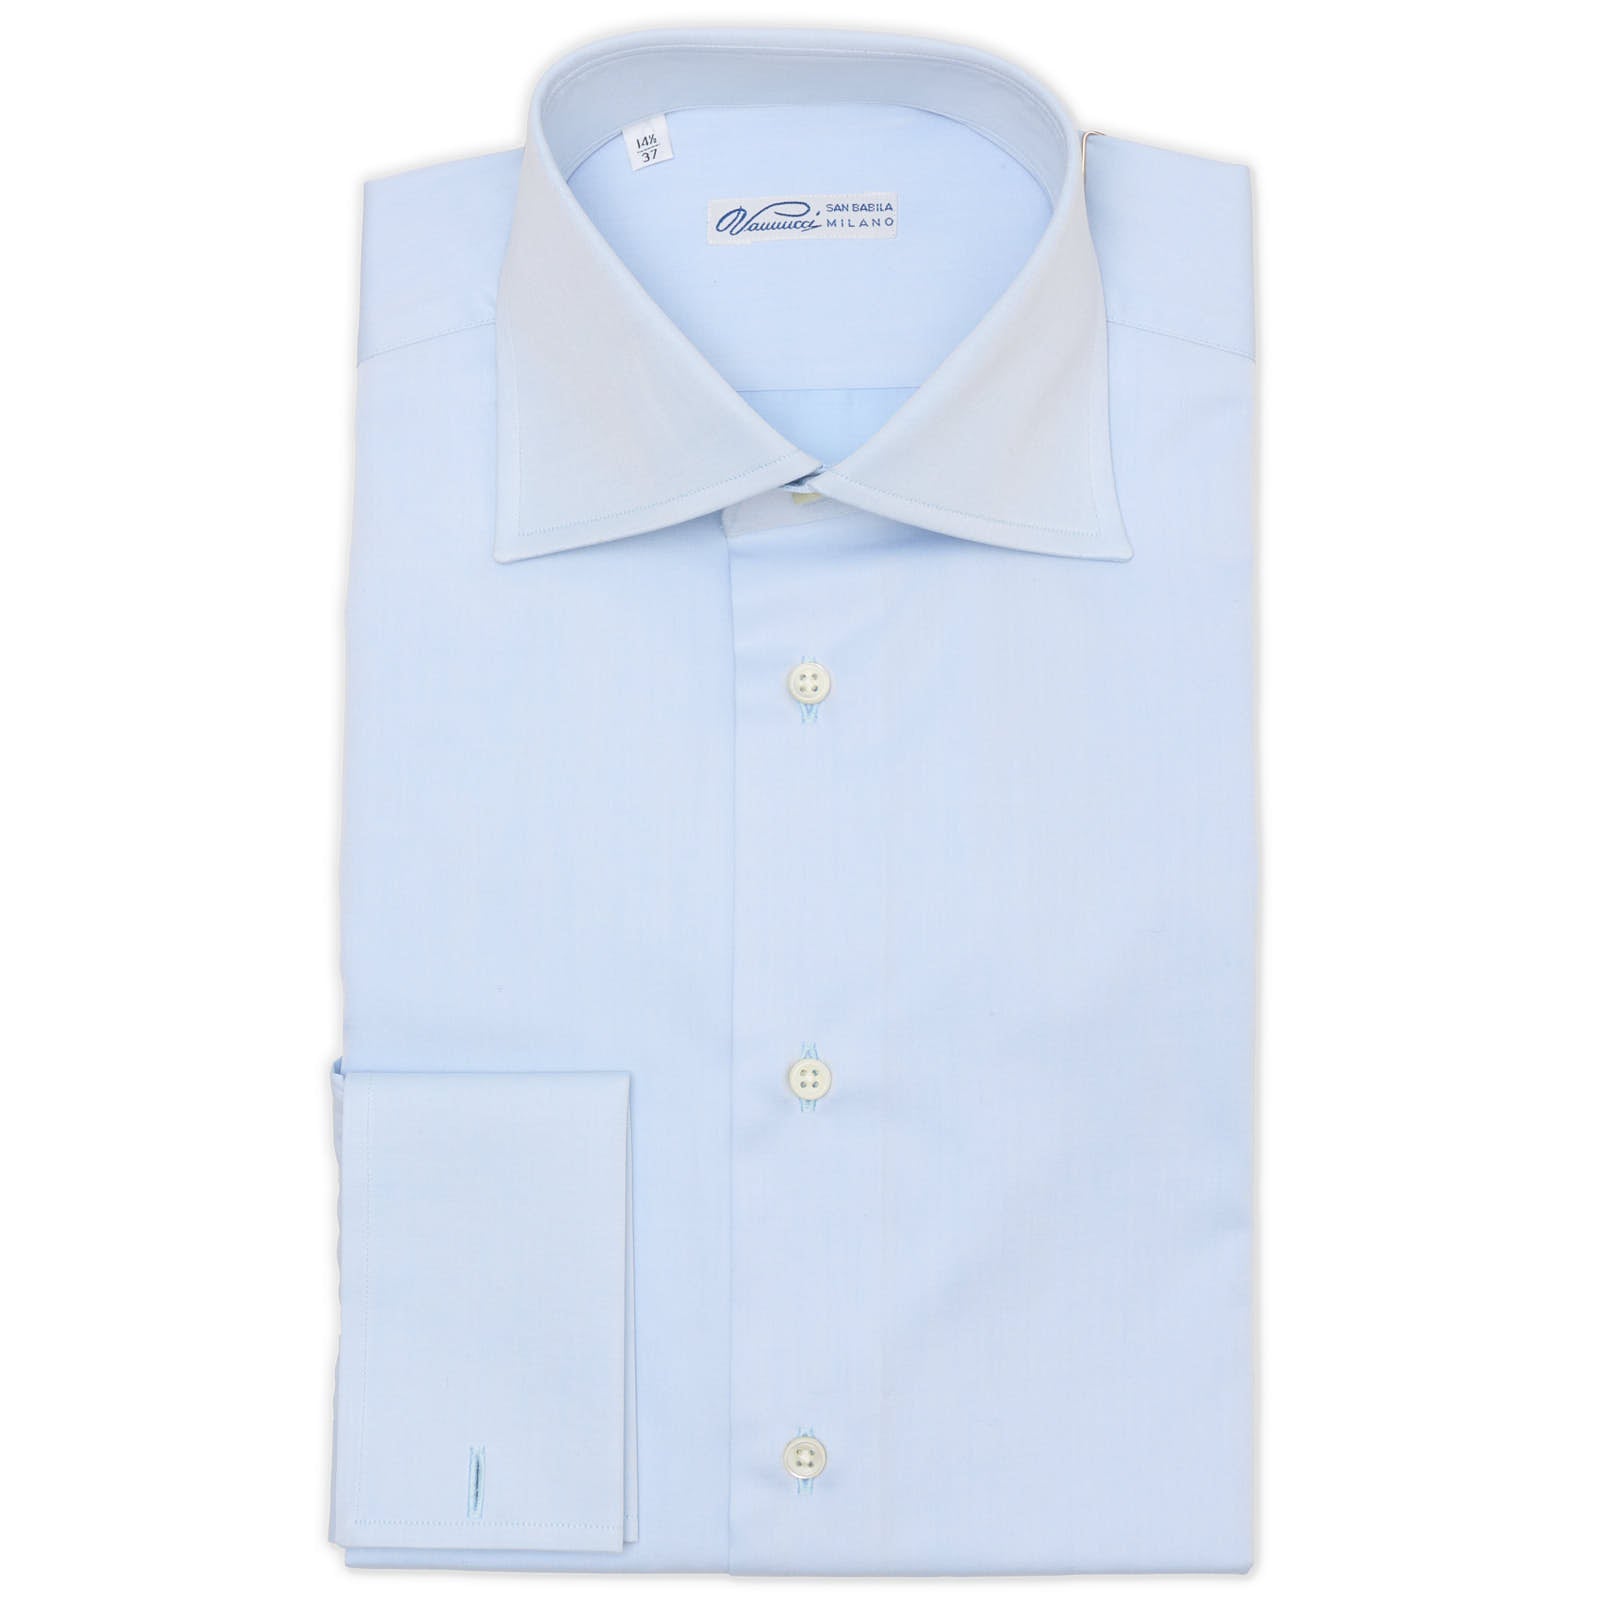 VANNUCCI Milano Blue Twill Cotton French Cuff Dress Shirt EU 37 NEW US 14.5